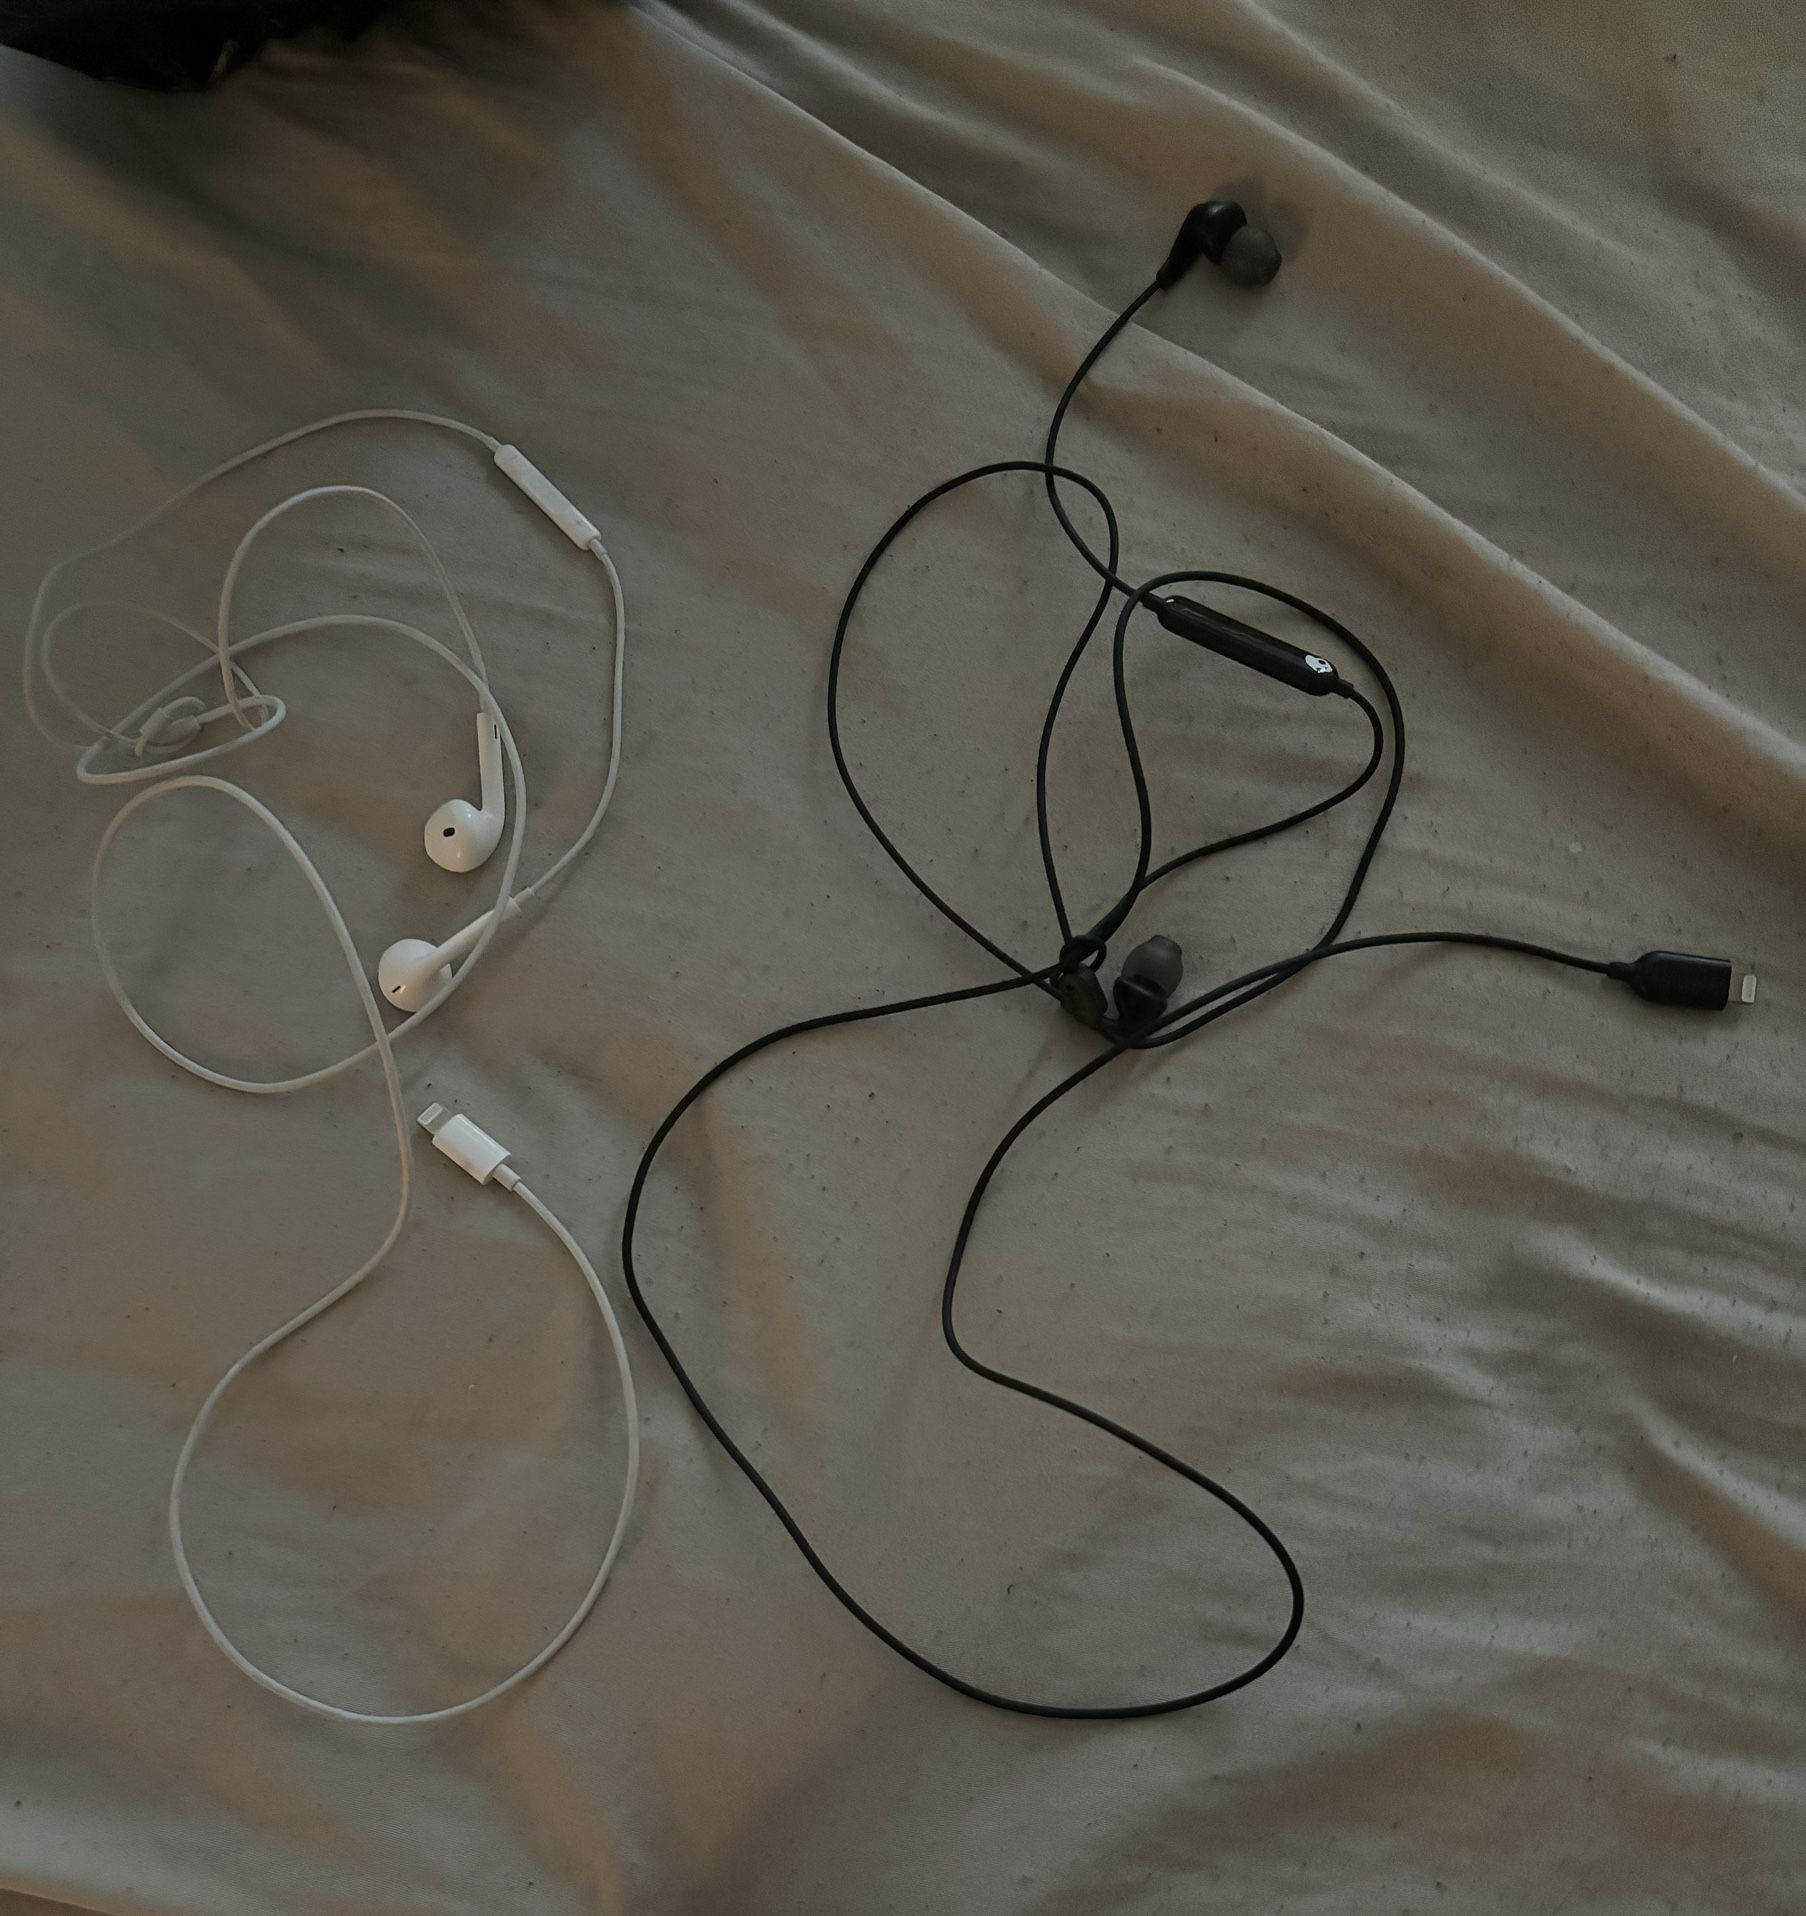 2 Iphone headphones